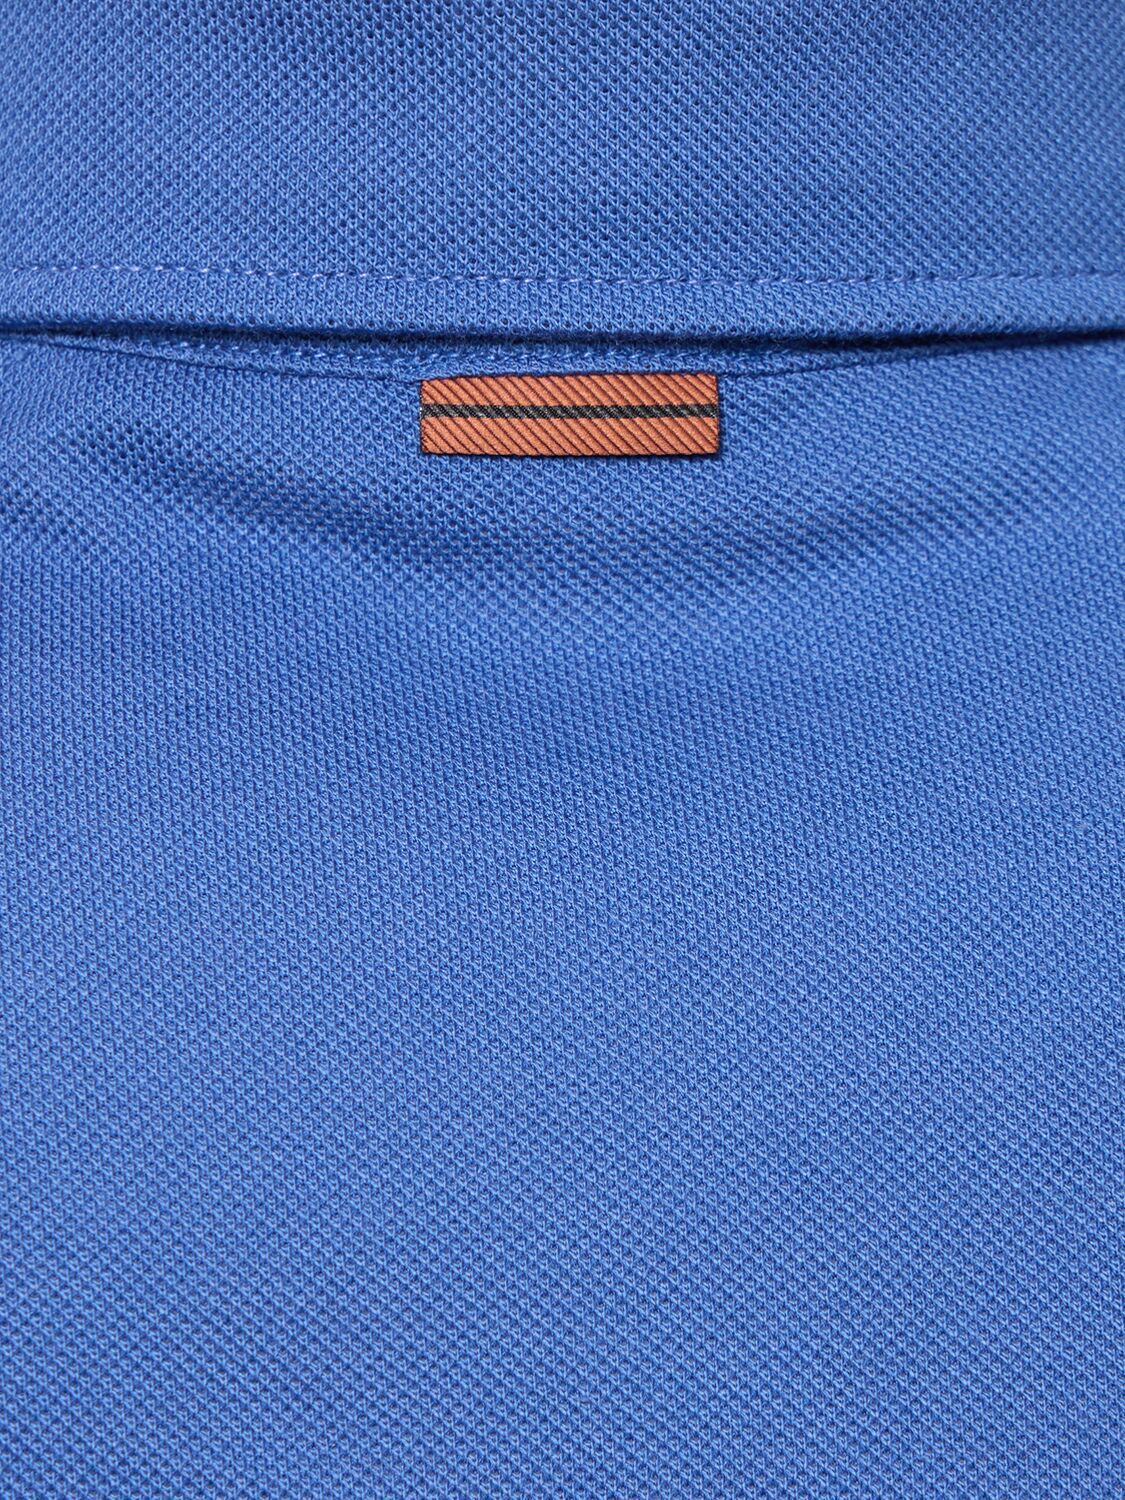 Shop Zegna Cotton Piquet Short Sleeve Polo In Light Blue